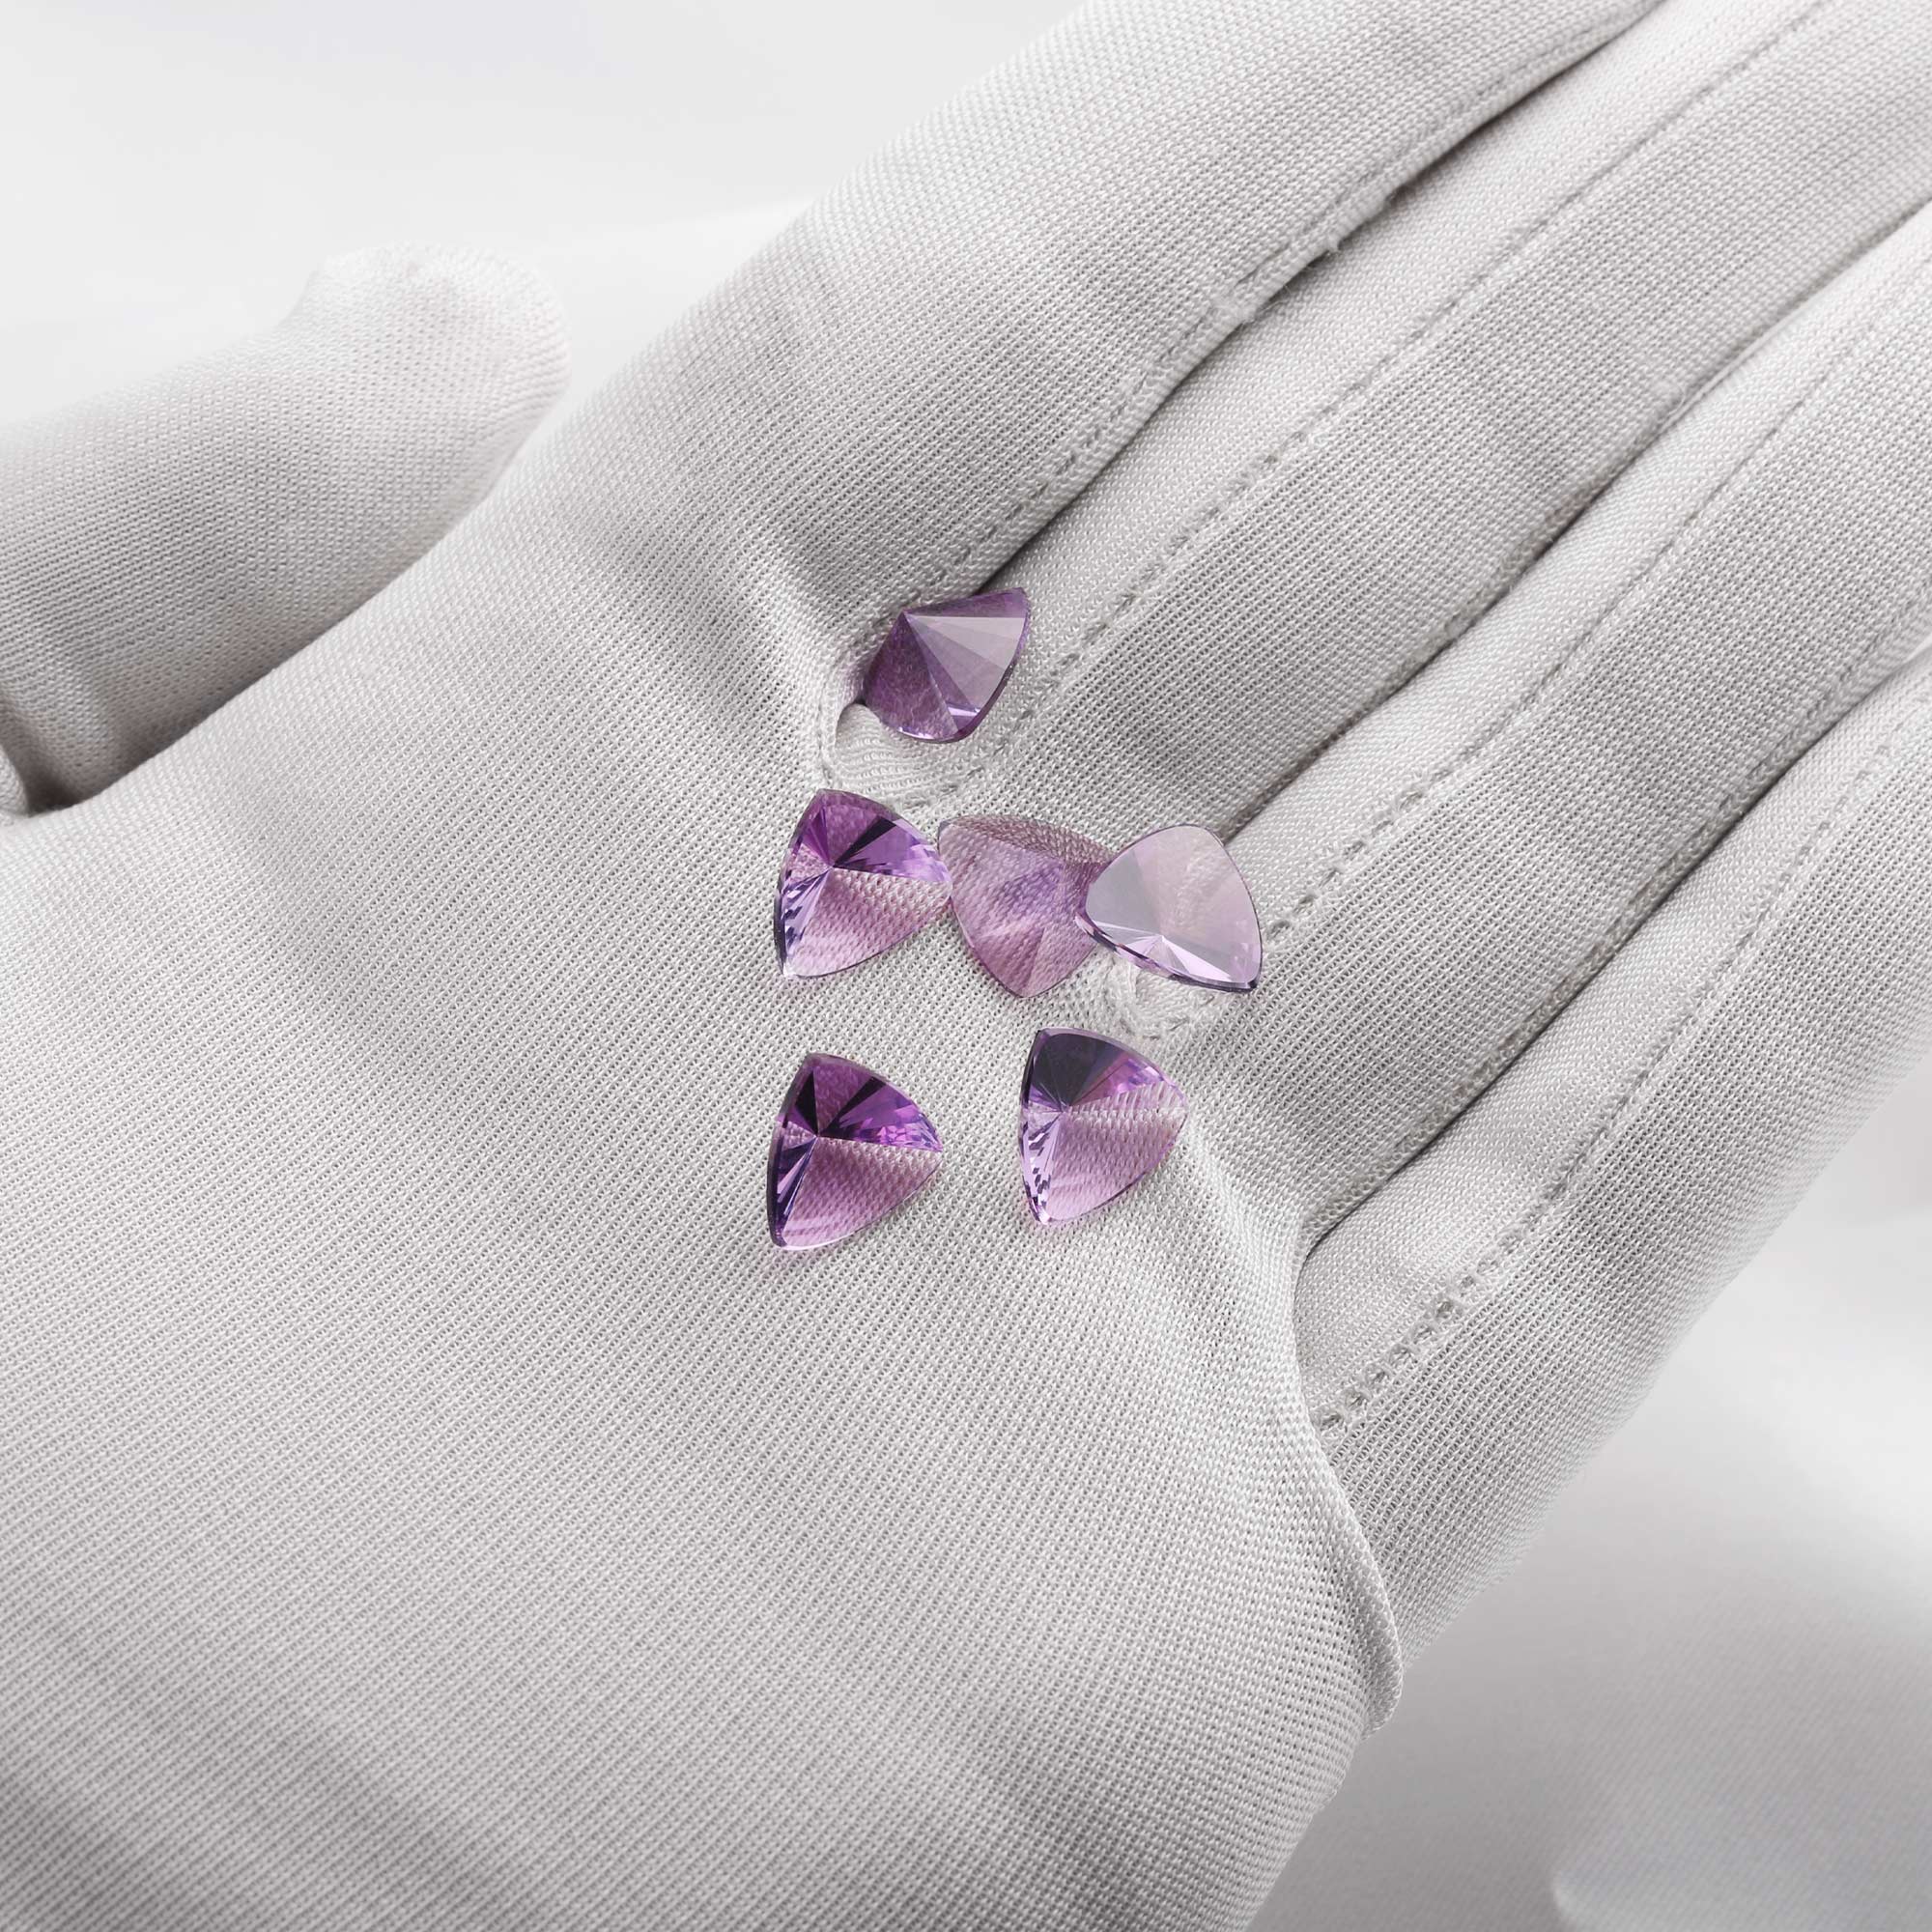 10MM Trillion Cut Nature Amethyst Gemstone,February Birthstone,Purple Triangle Gemstone,DIY Jewelry Supplies,2CT - Click Image to Close